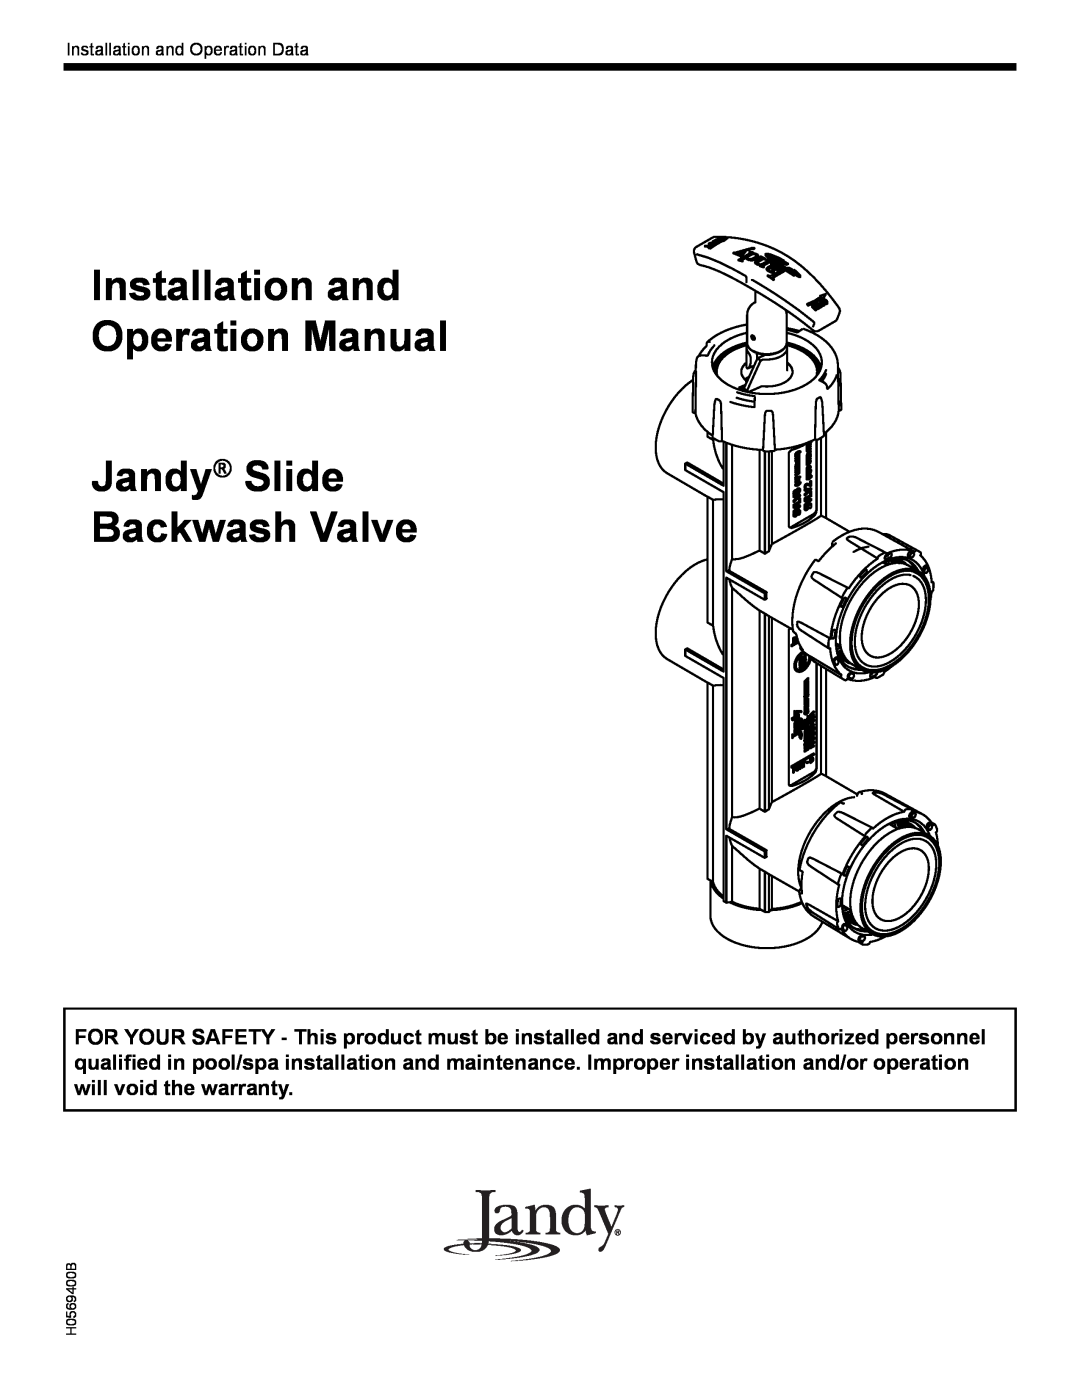 Pentair Slide Backwash Valve operation manual Installation and Operation Data, H0569400B 